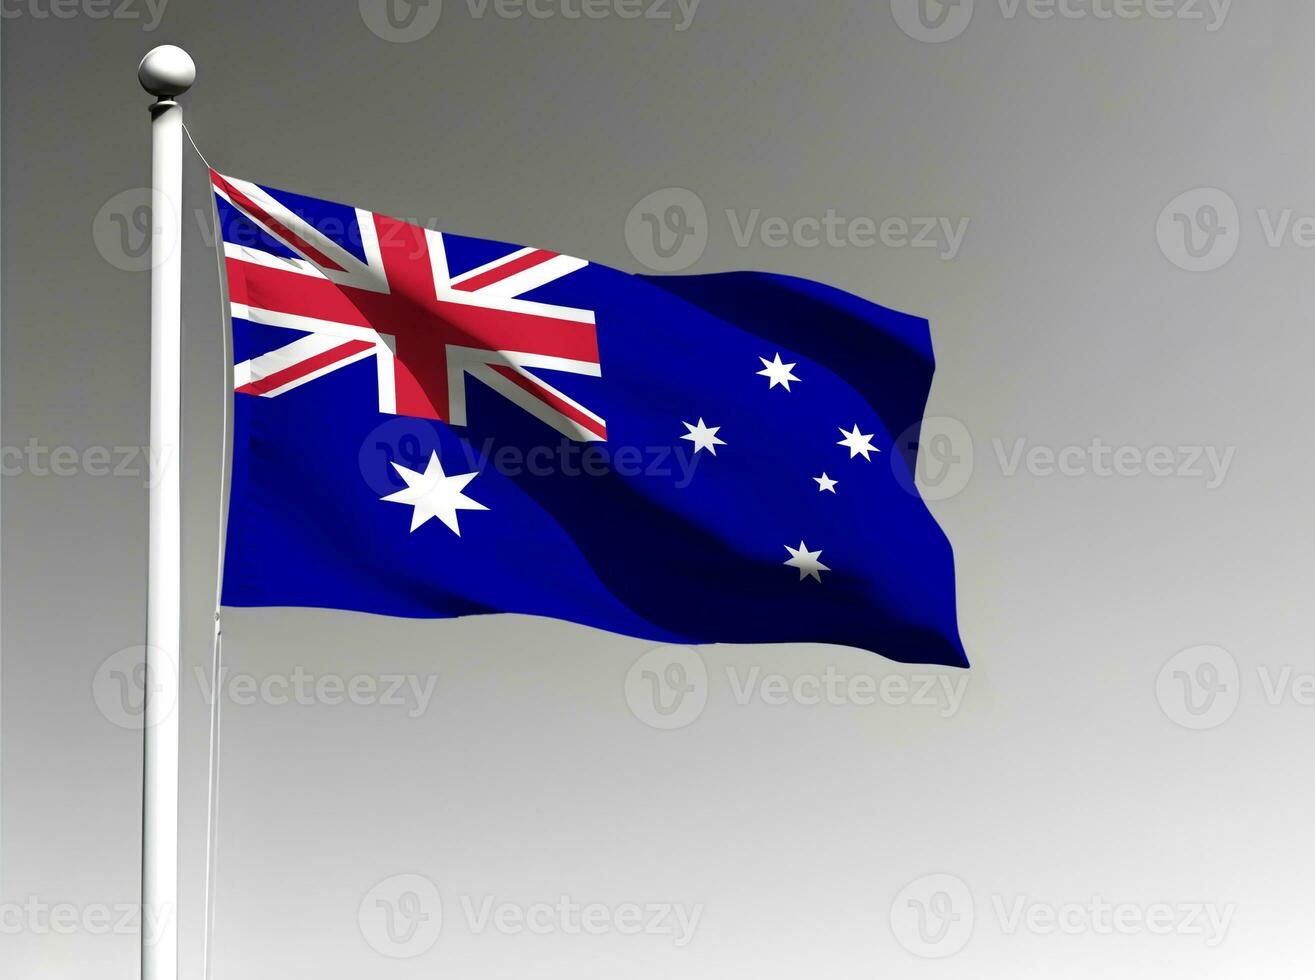 Australia national flag waving on gray background photo